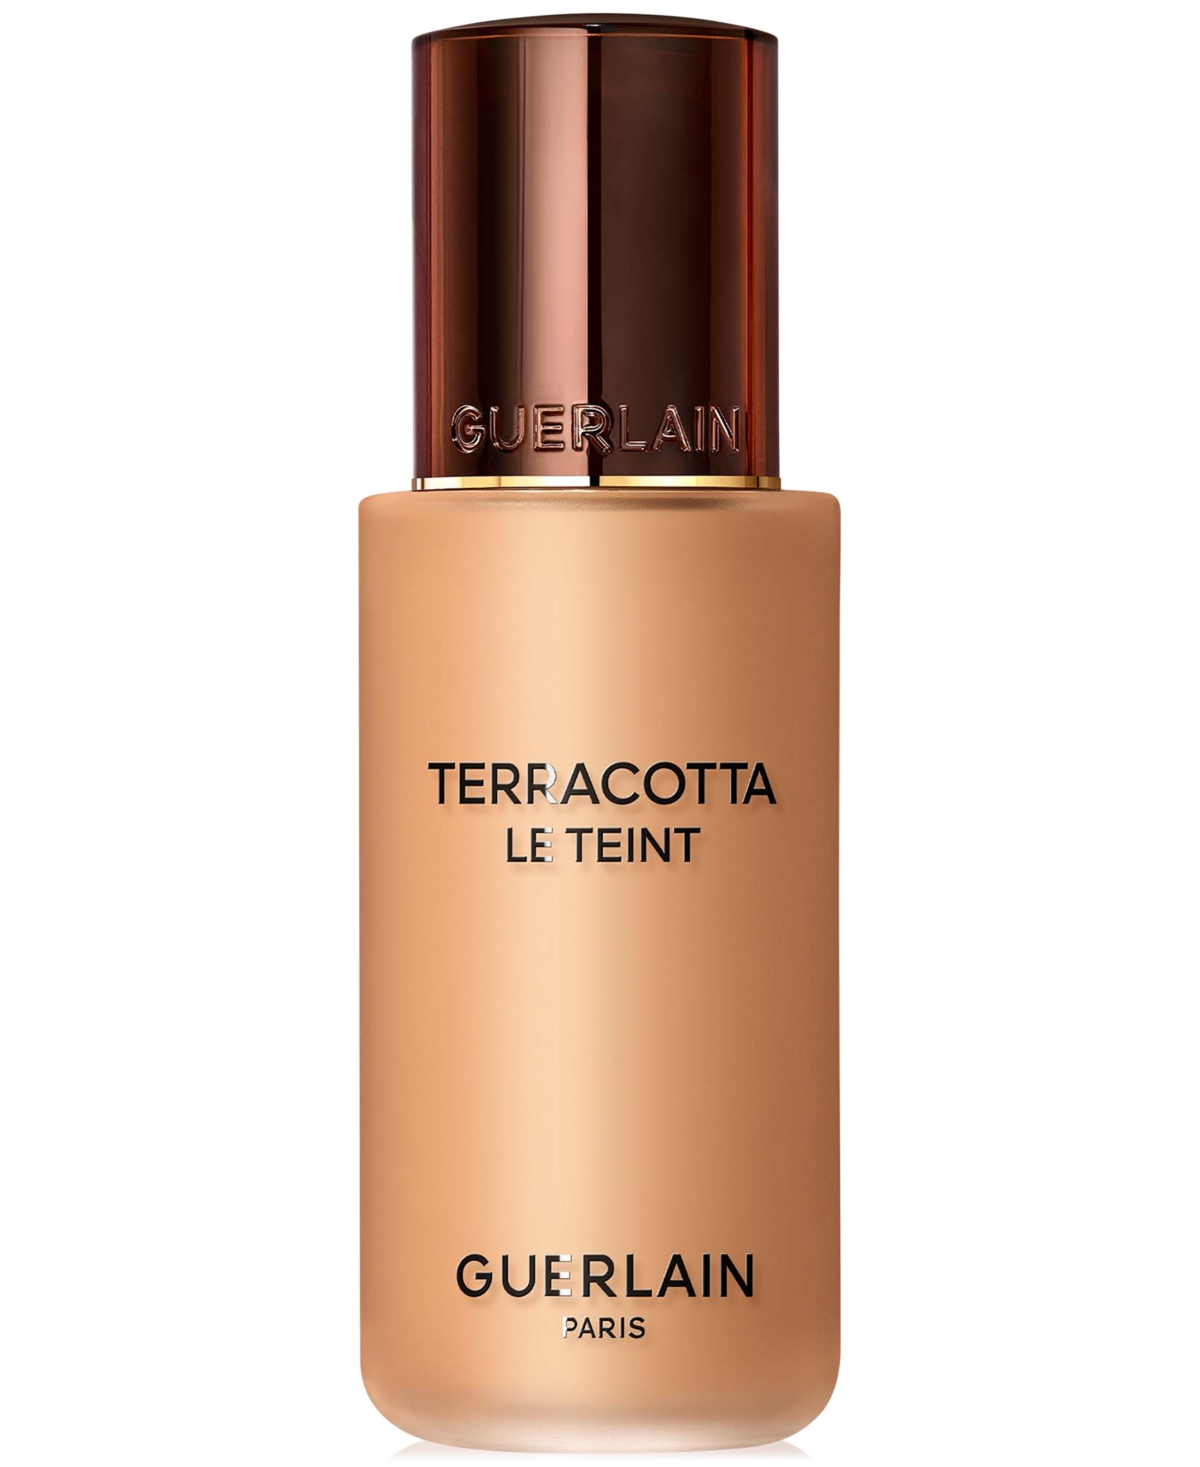 Guerlain Terracotta Le Teint Healthy Glow Foundation In .w Medium Skin With Golden Undertones